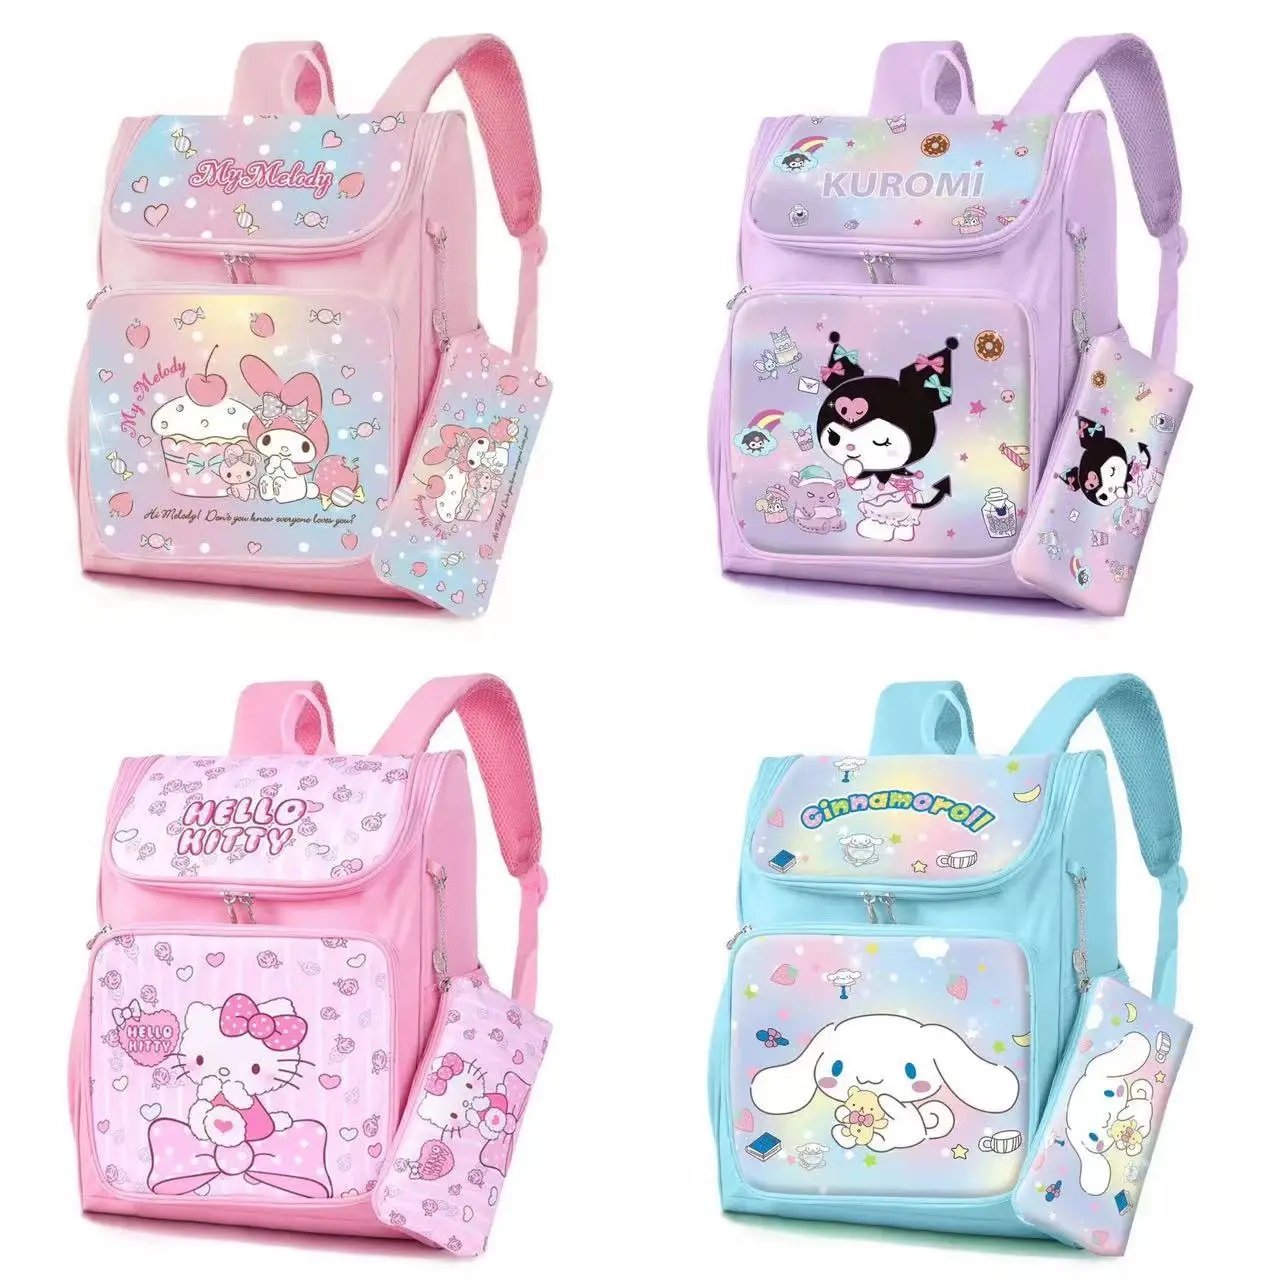 New Sanrio Series Cartoon Student Backpack Kitty Kuromi Anime Student ...